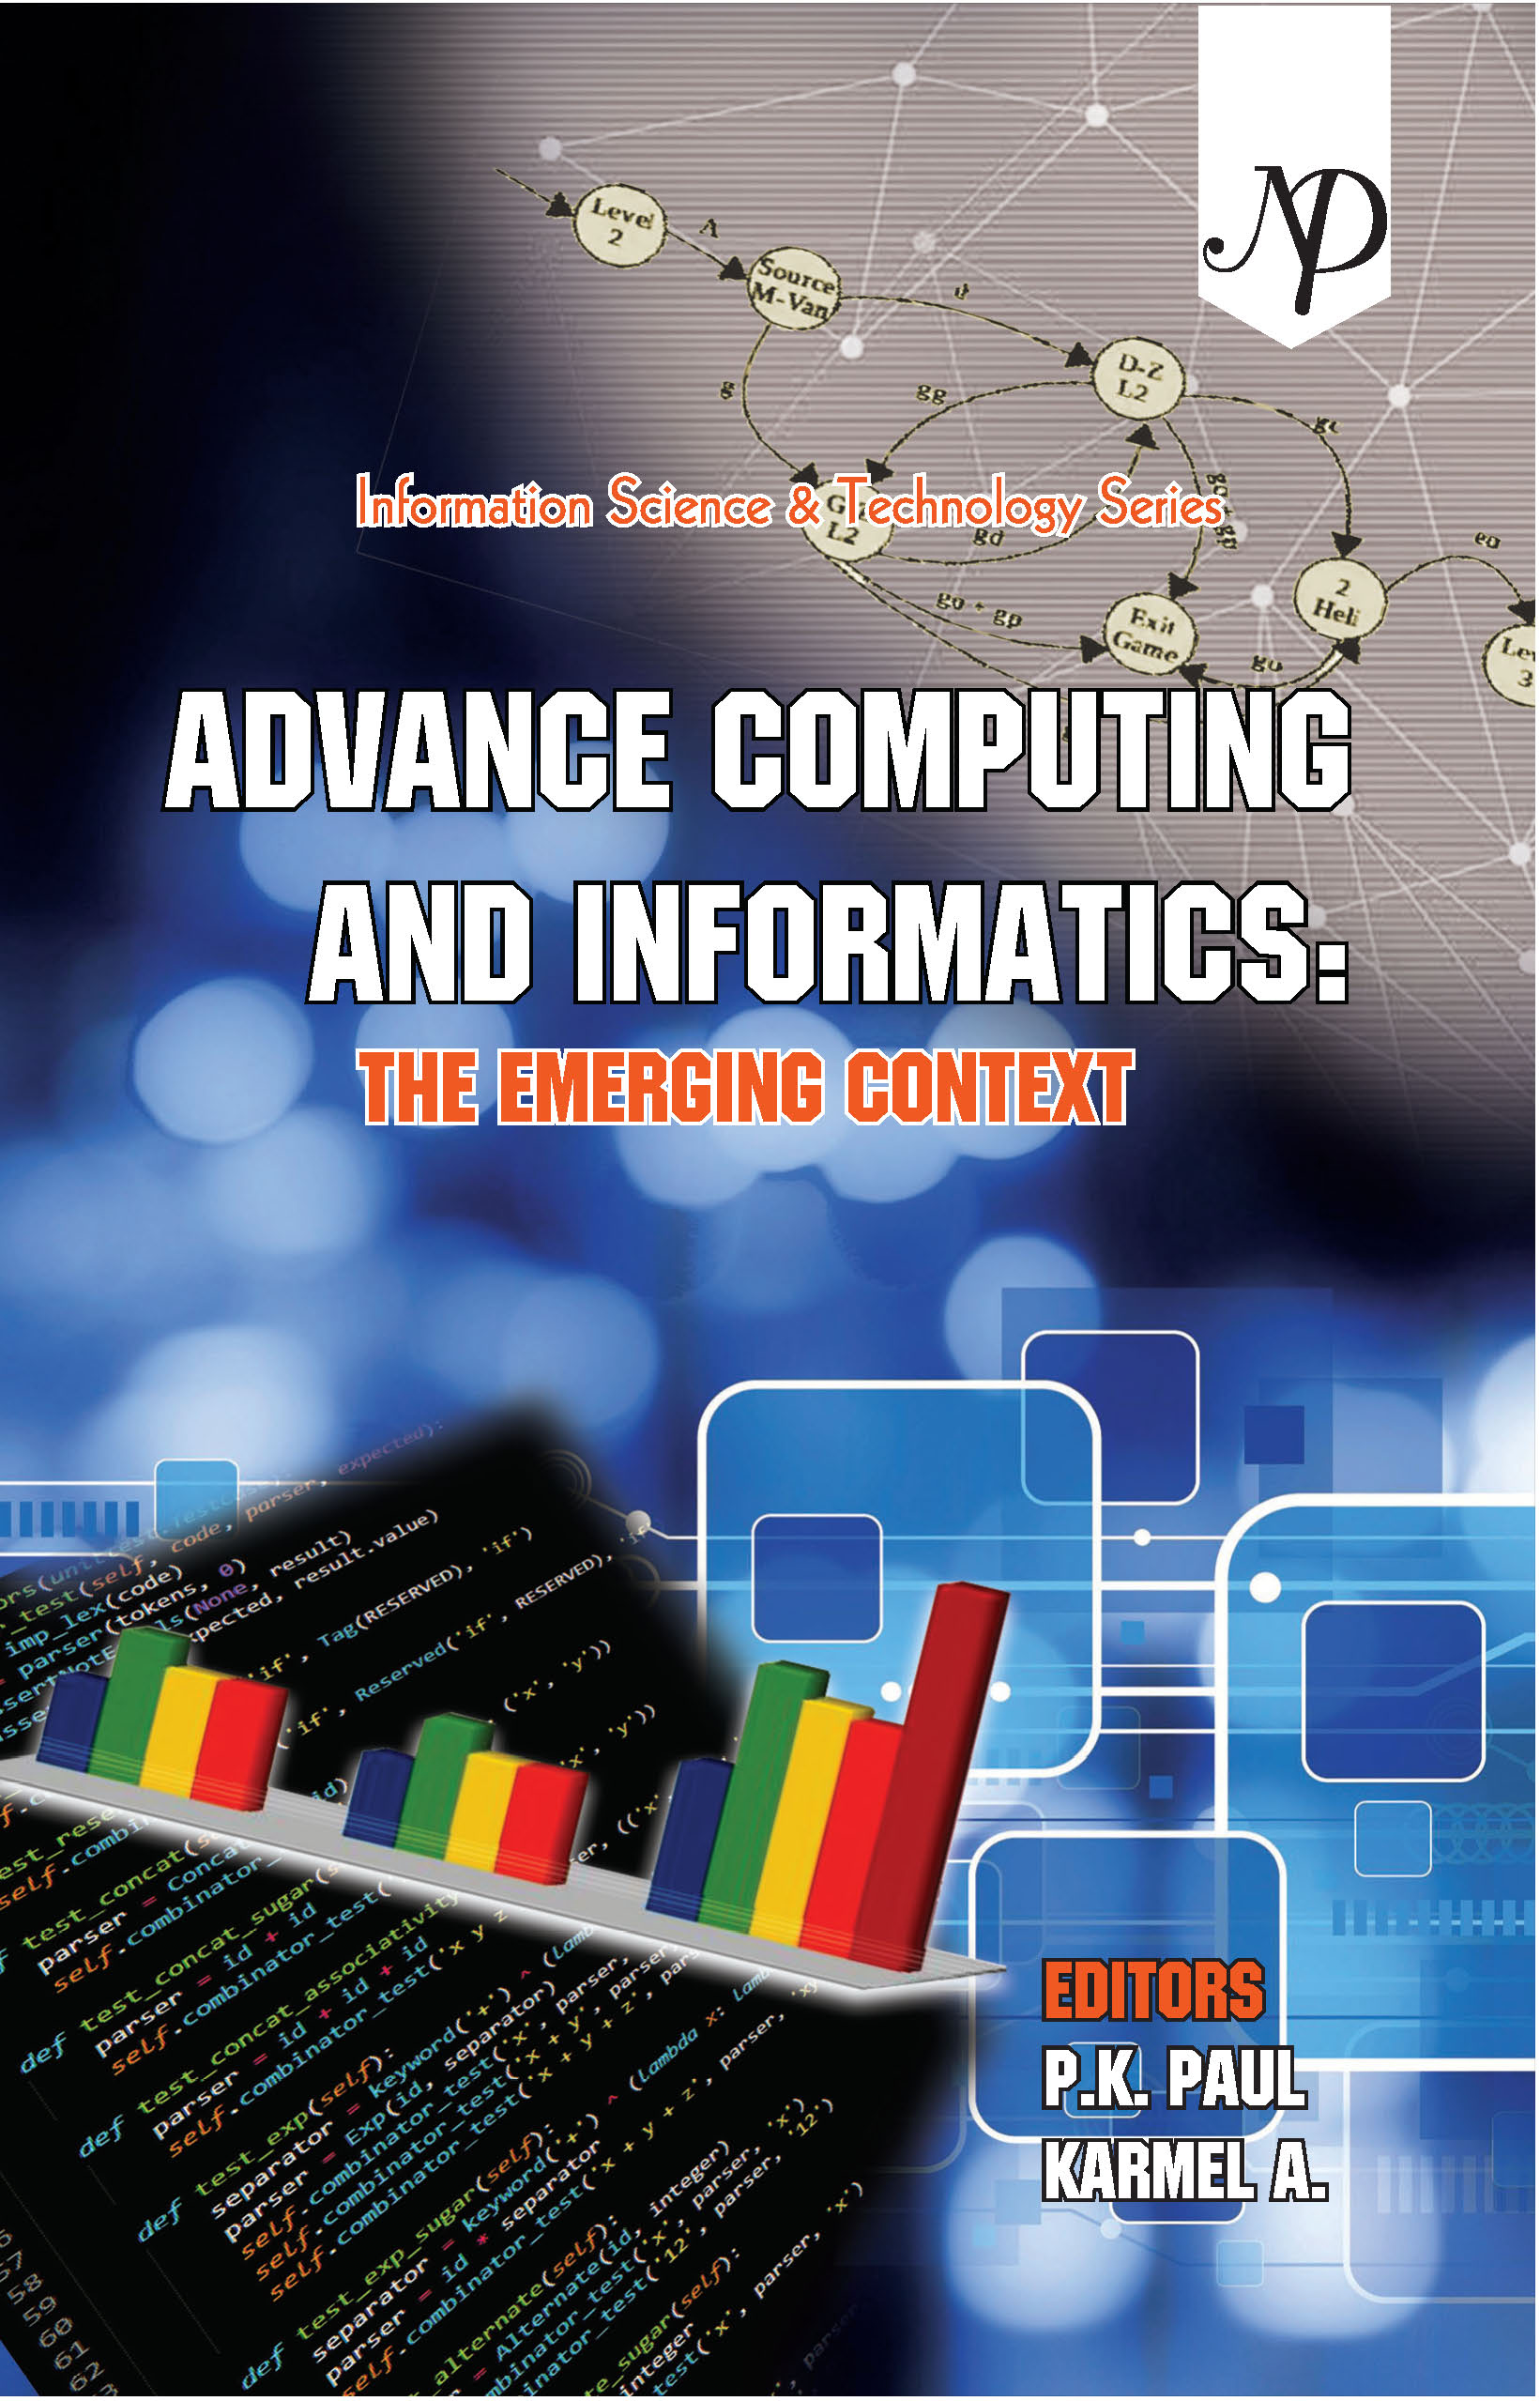 Advance Computing Informatics Cover.jpg